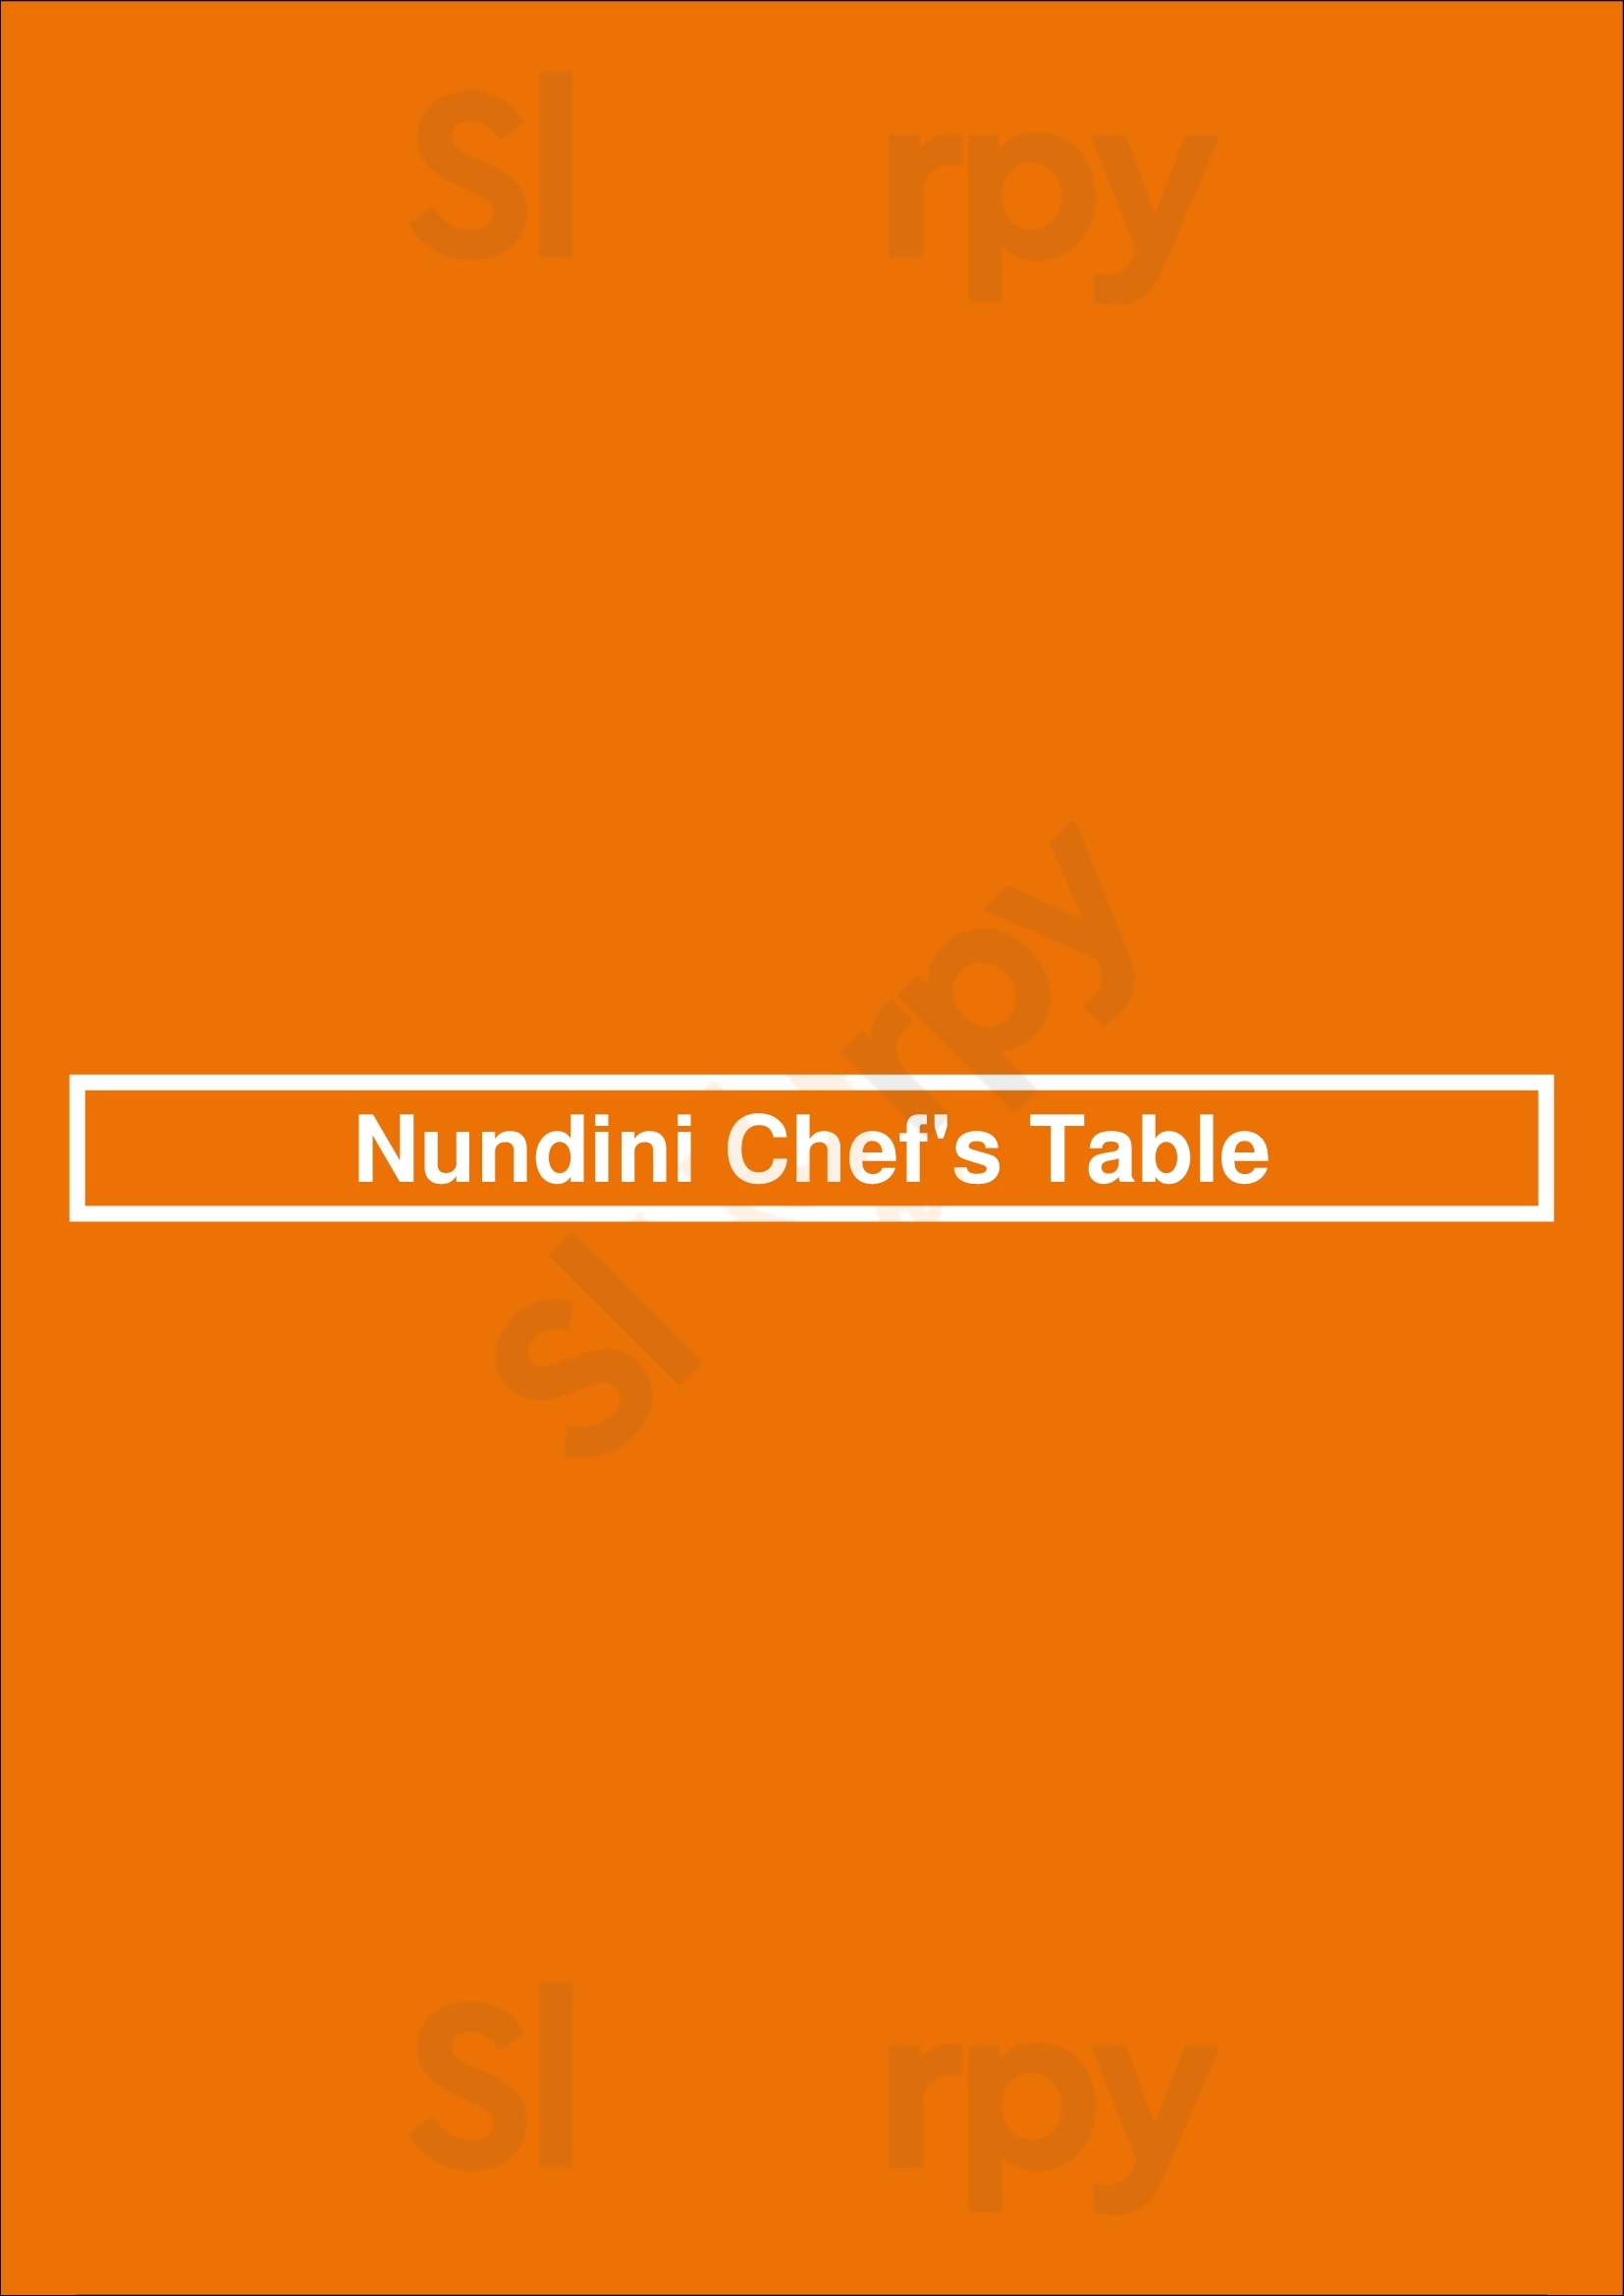 Nundini Chef's Table Houston Menu - 1